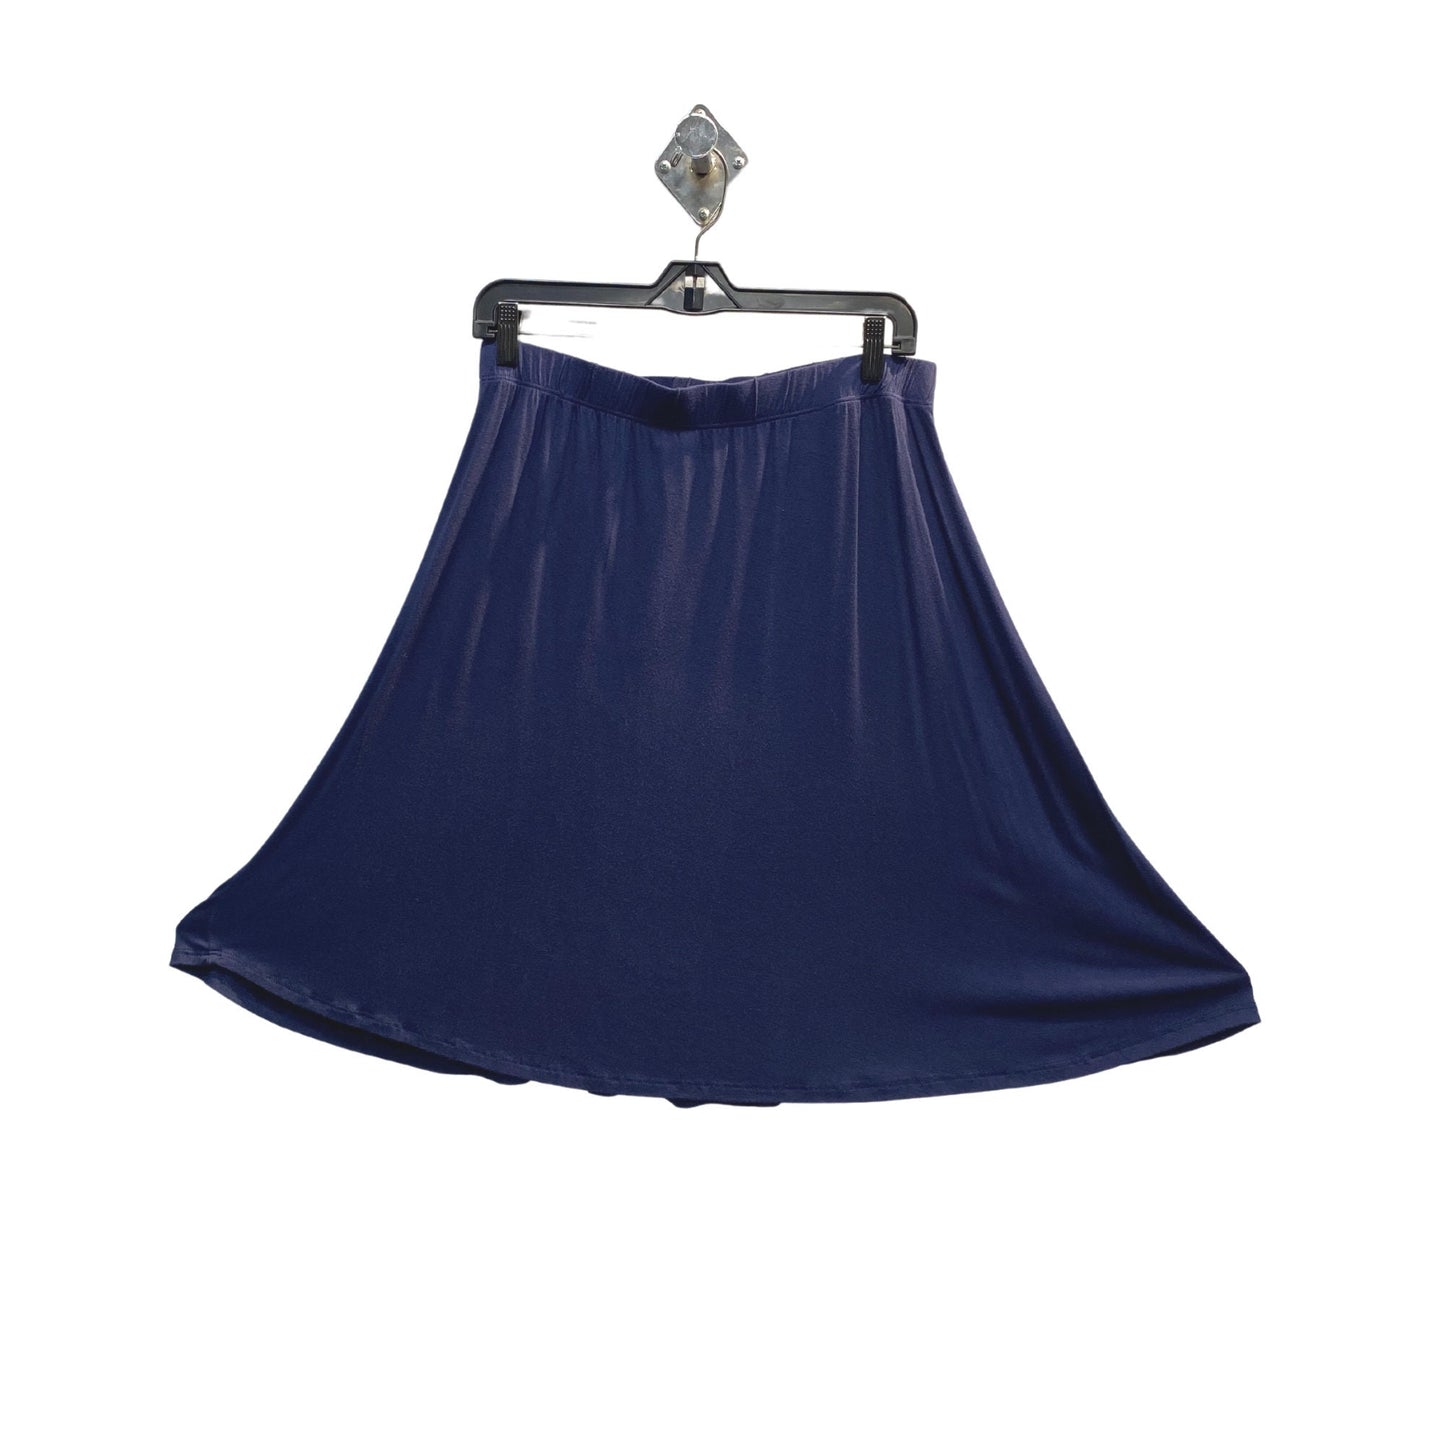 Fun & Flirty PLUS SIZE A-Line Navy Blue Skirt Modest Below Knees Tznius Skirt Plus Size School Uniform Approved Plus Size Skirt